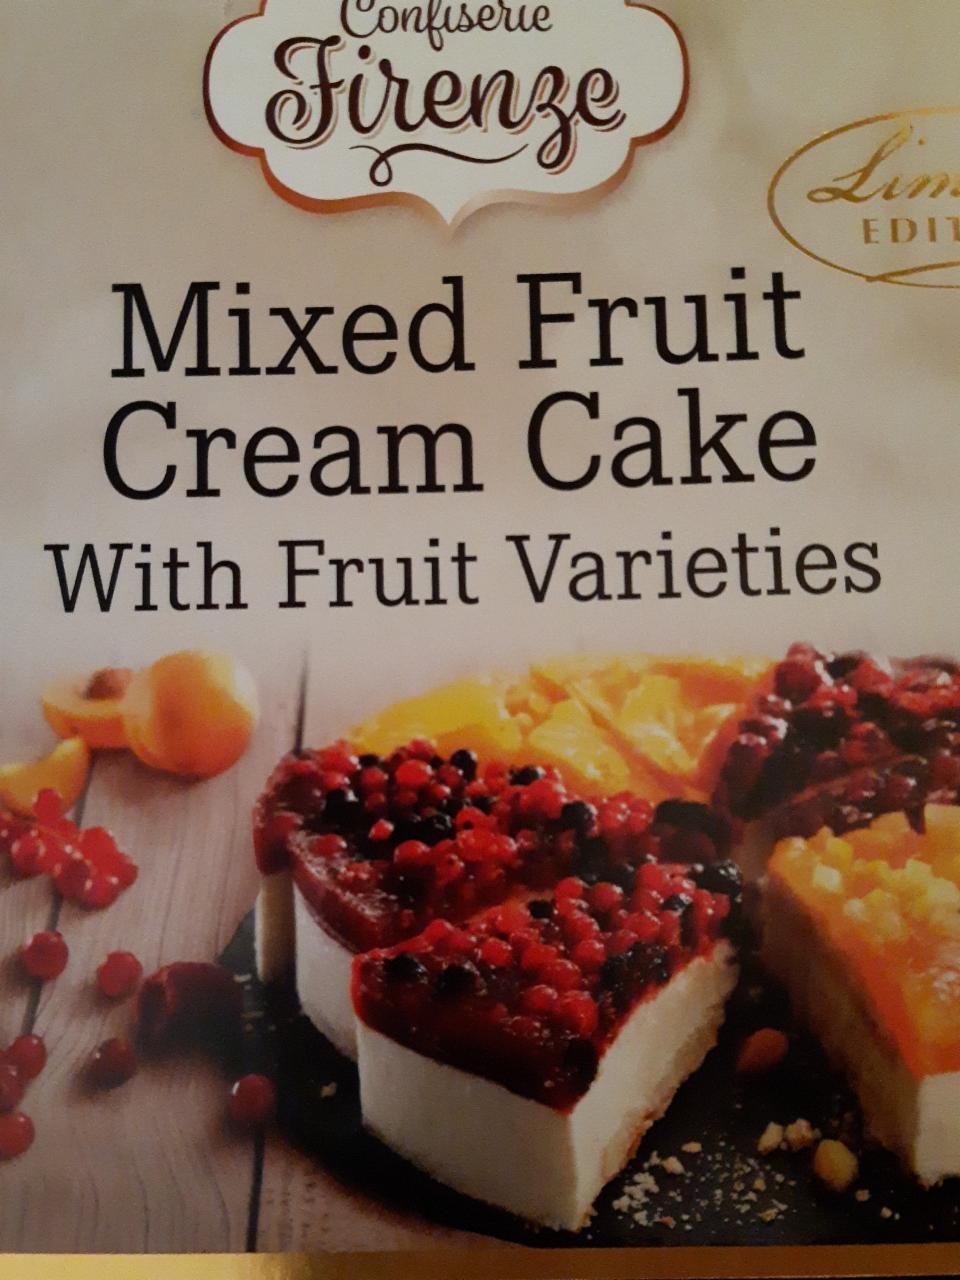 Képek - Mixed fruit cream cake with fruit varieties Confiserie Firenze